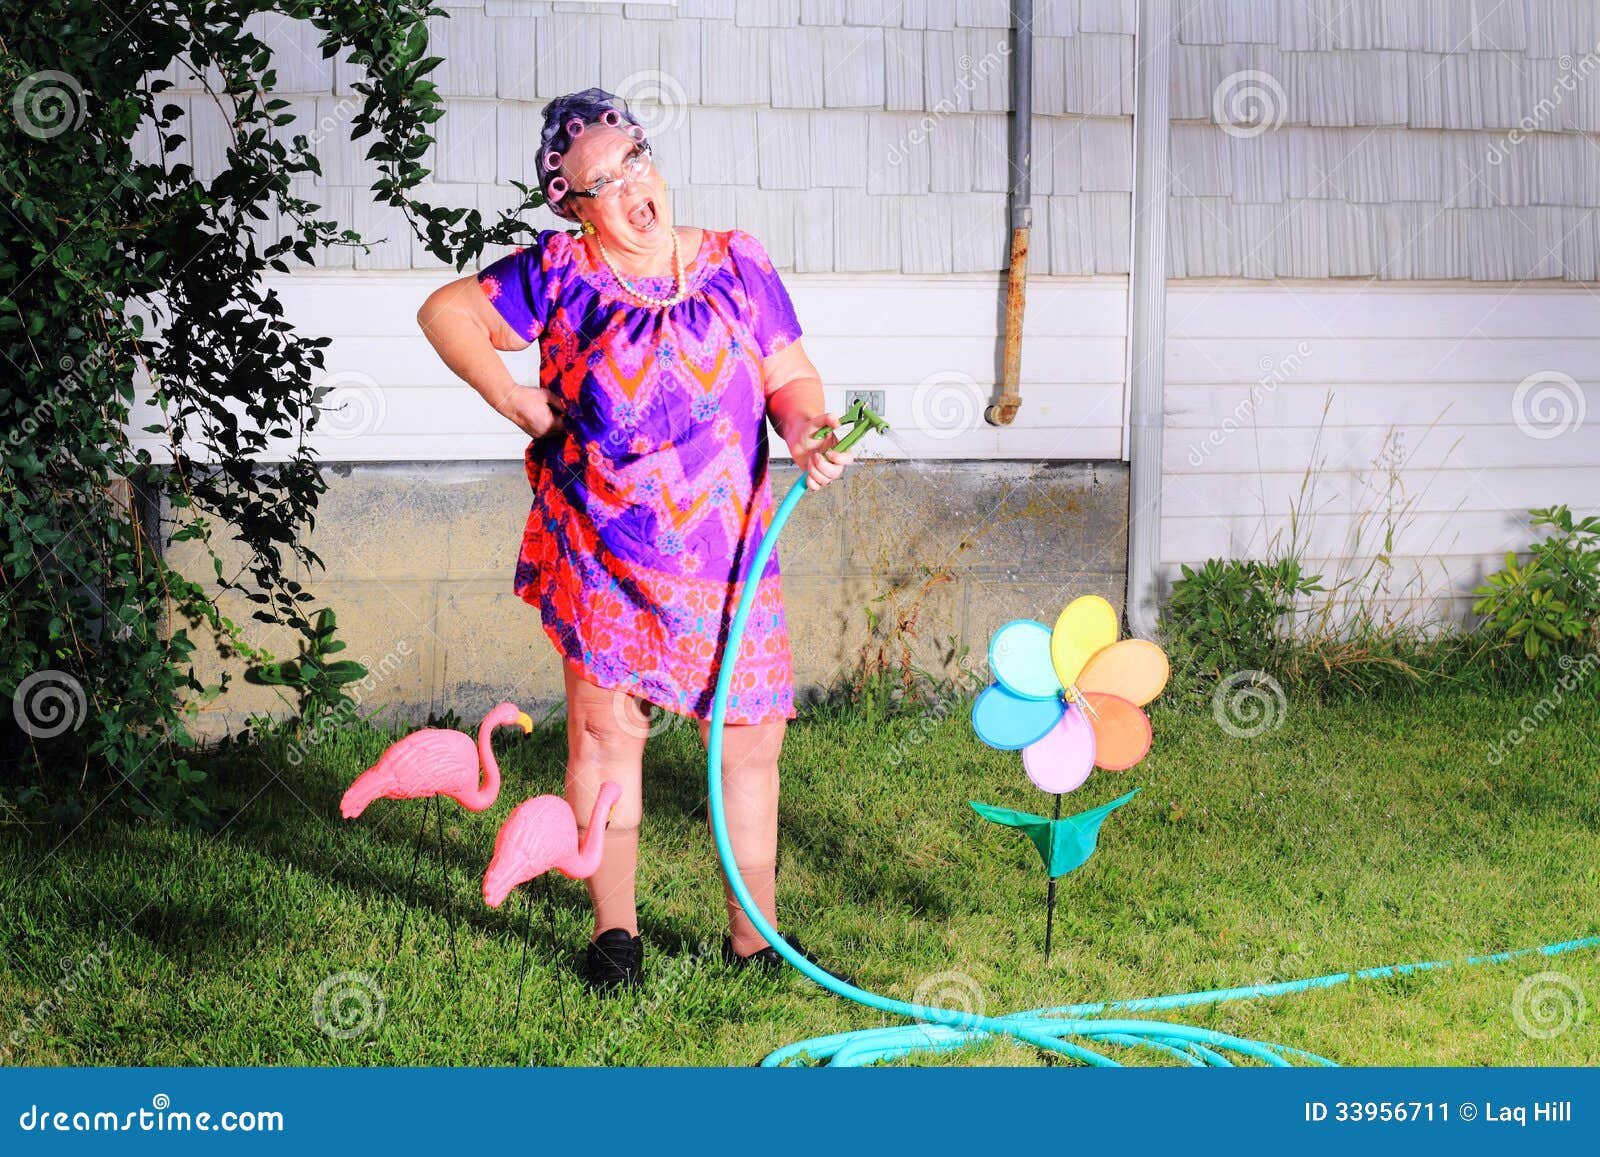 Grandma Gardener Taking A Break To Admire The View Stock Image 42195169